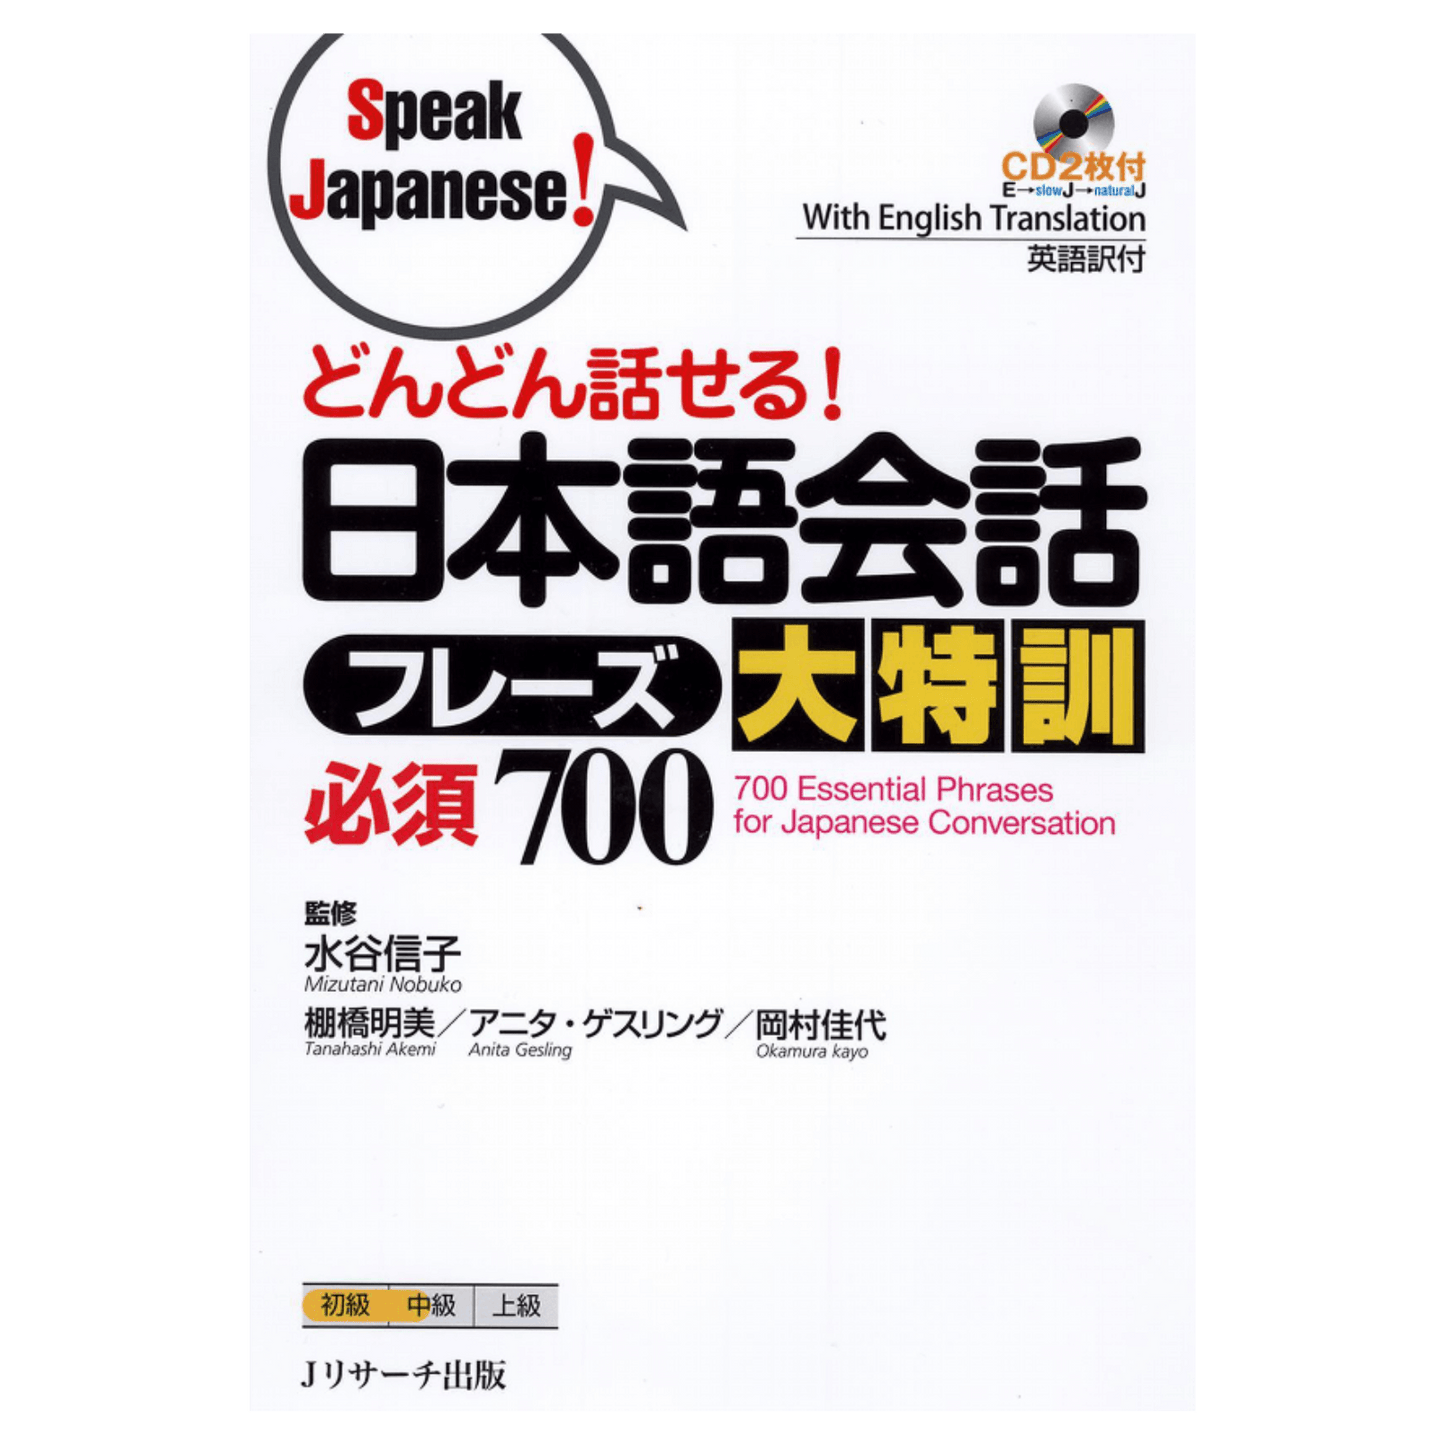 Japanese Handbook | SpeakJapanese! -どんどん話せる! ChitoroShop